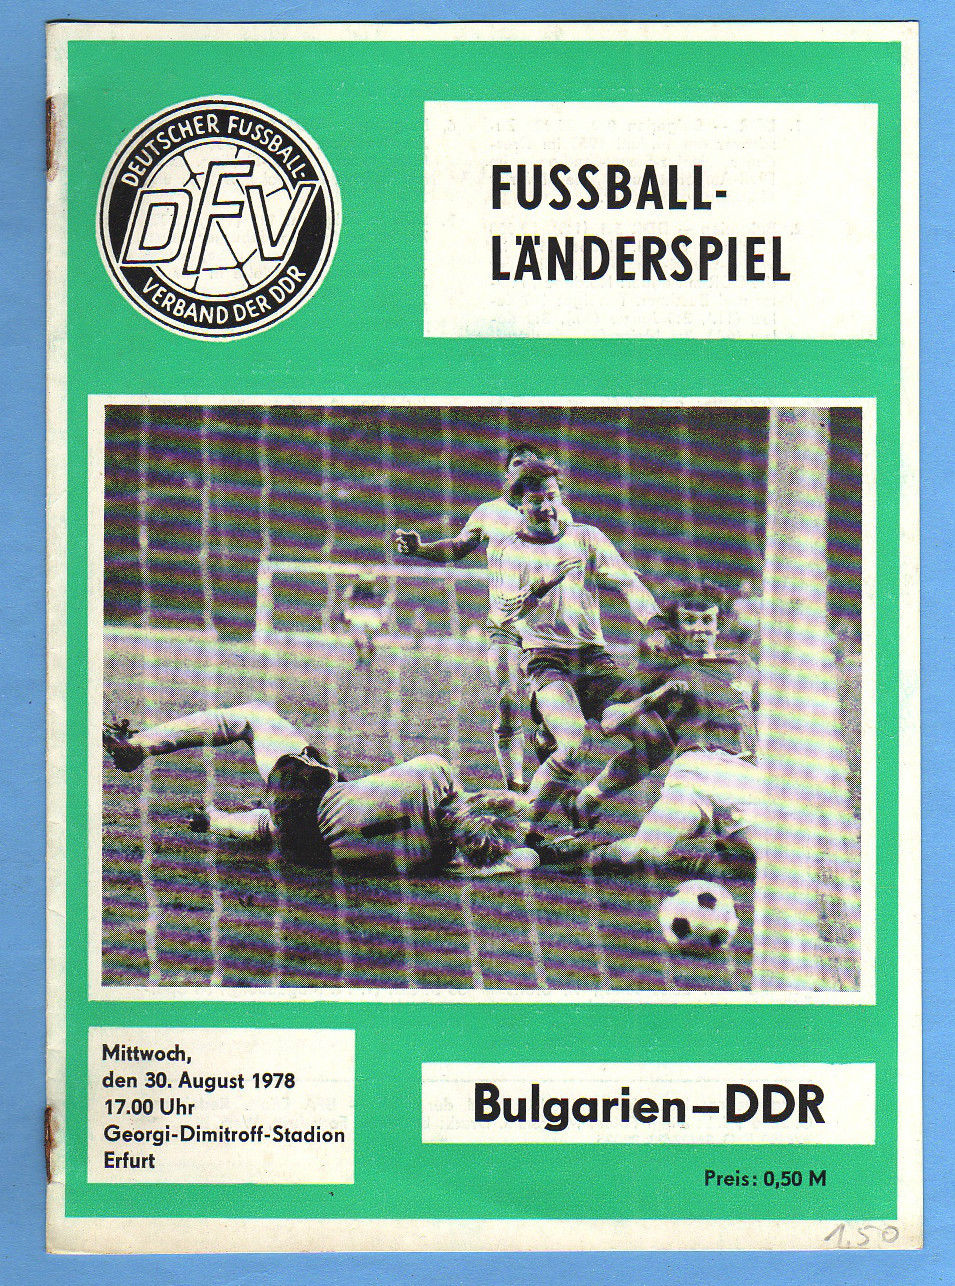 DDR - Bulgarien 78 (Erfurt).JPG